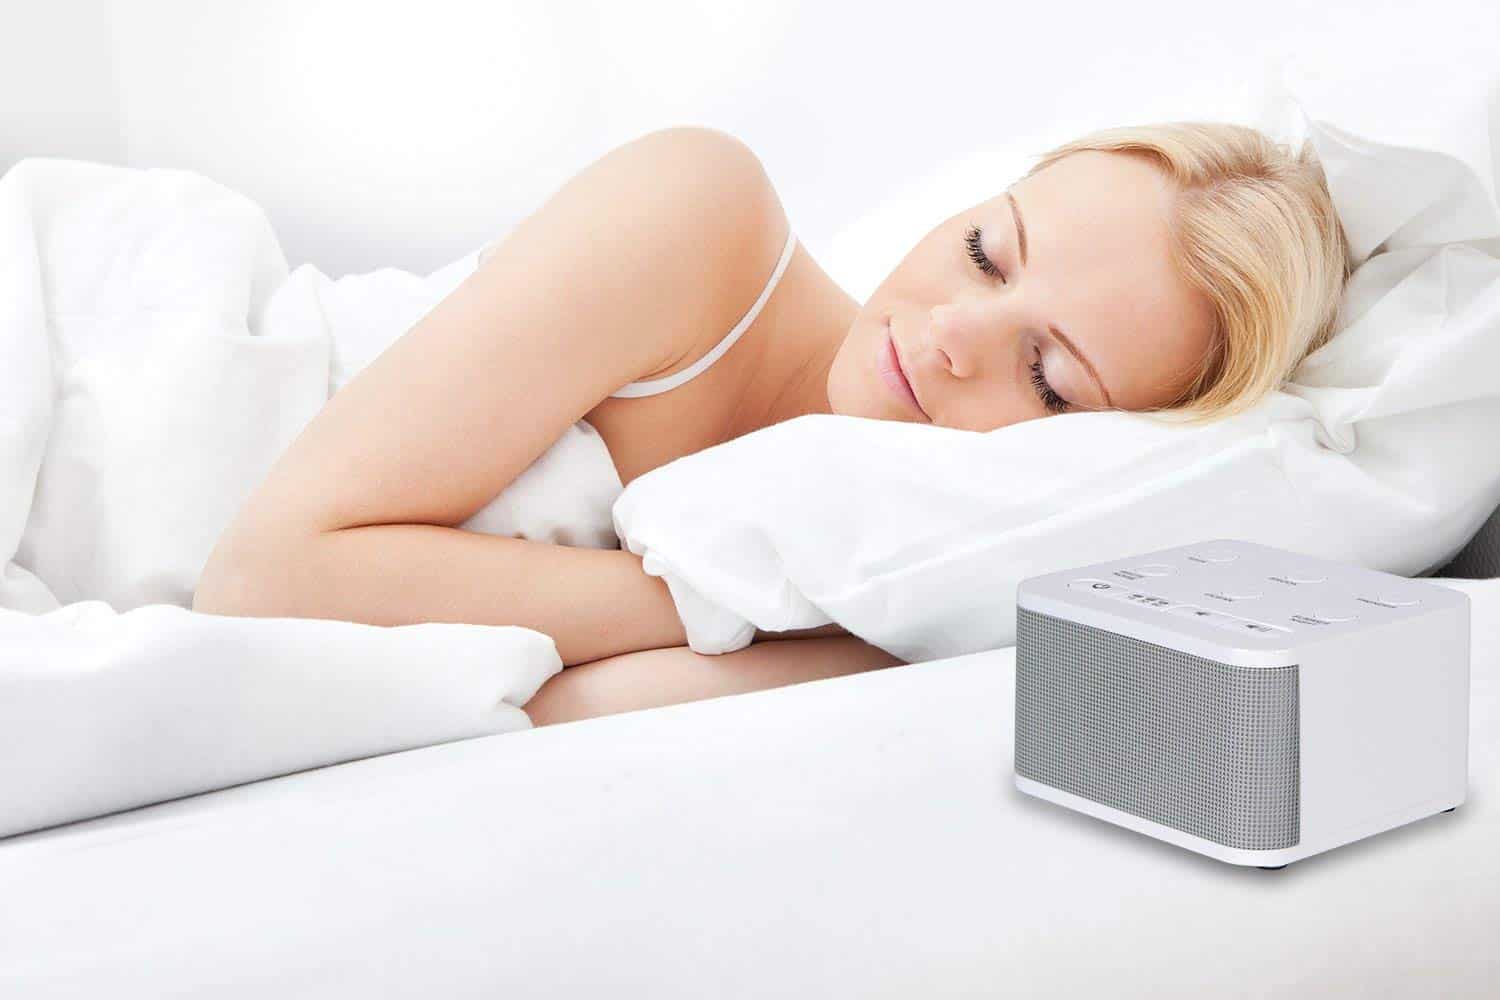 best noise machine alarm clock